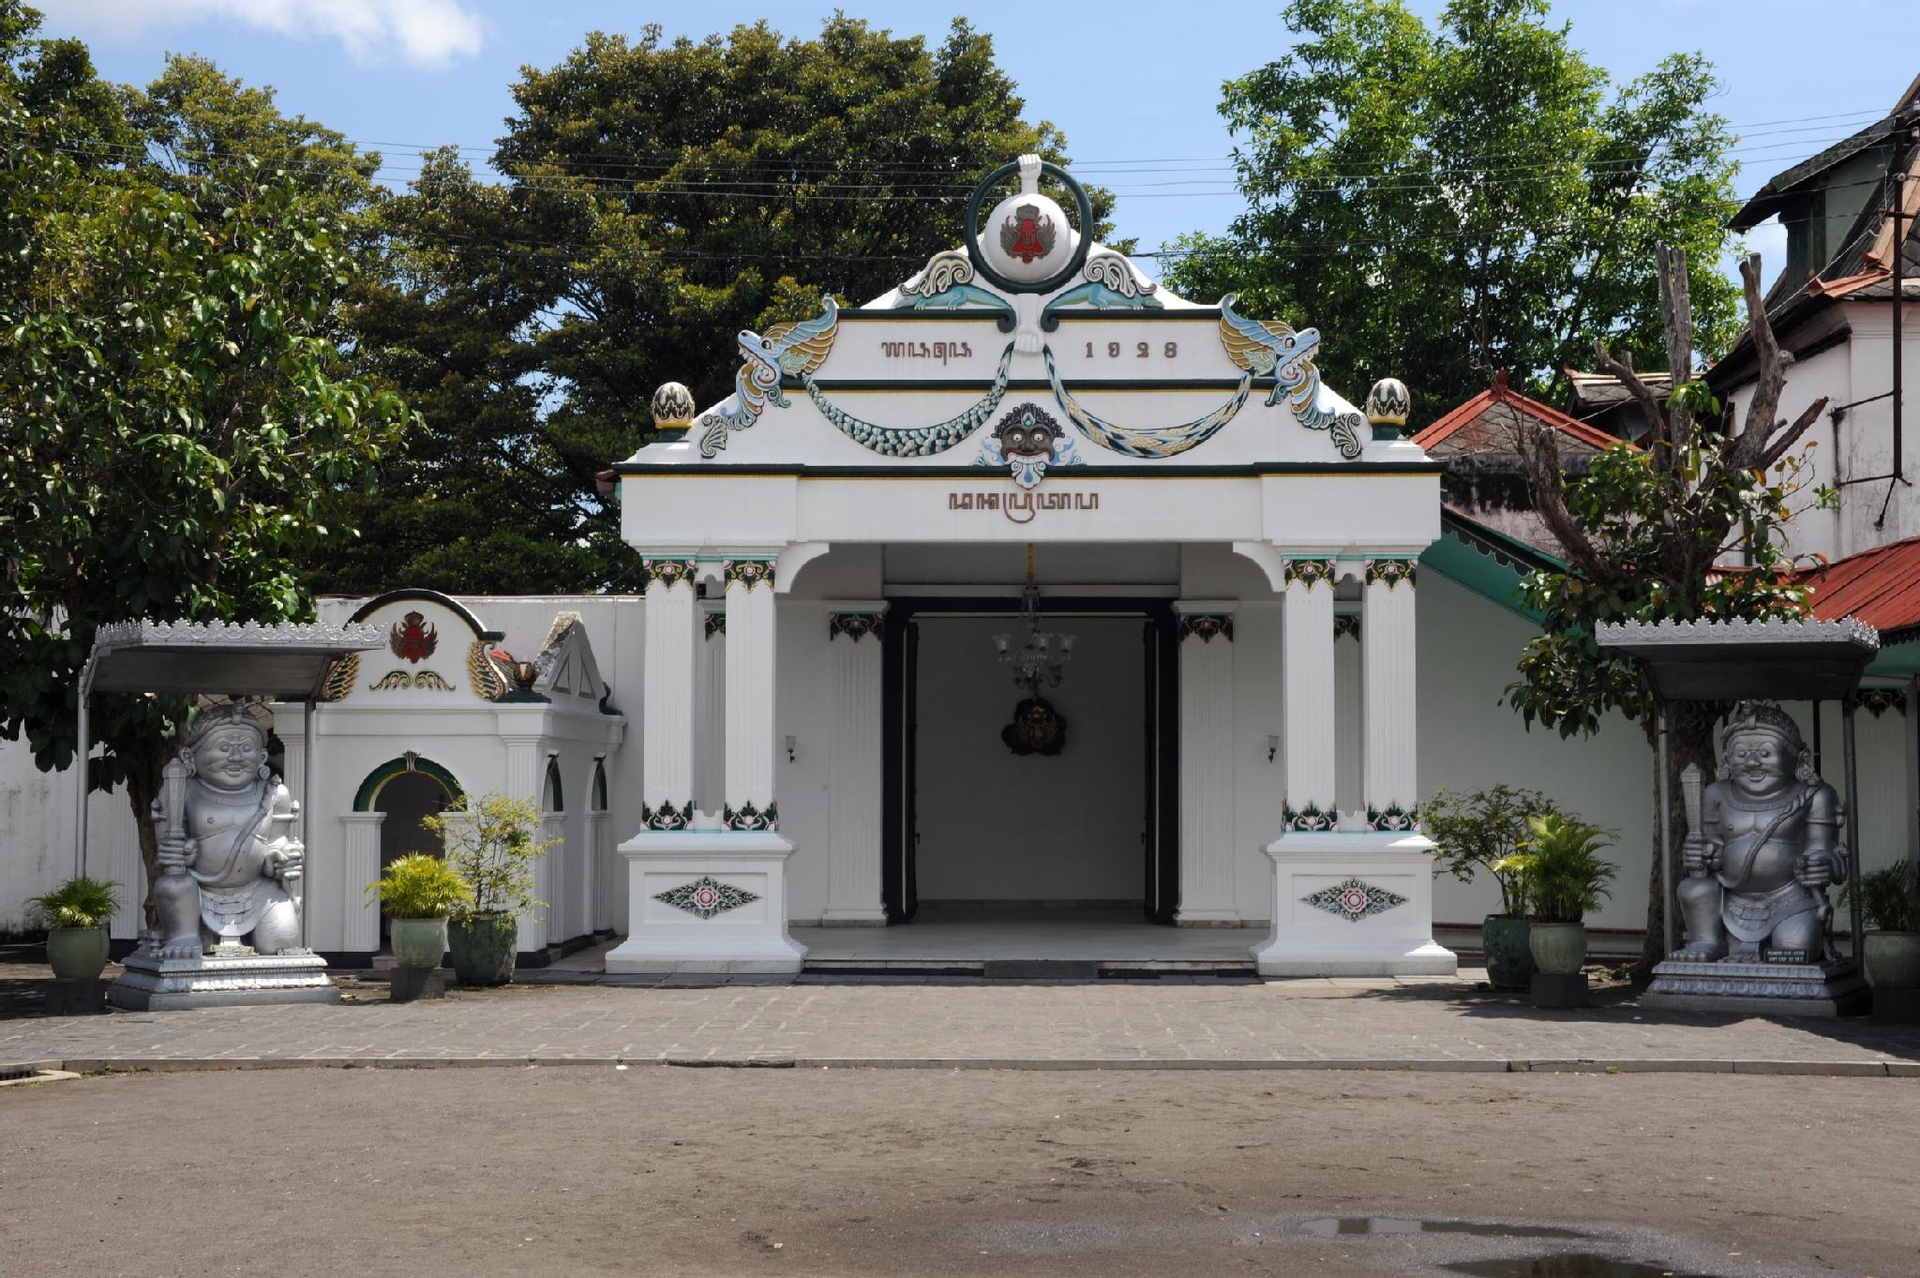 Exterior & Views 2, OstiC House, Yogyakarta